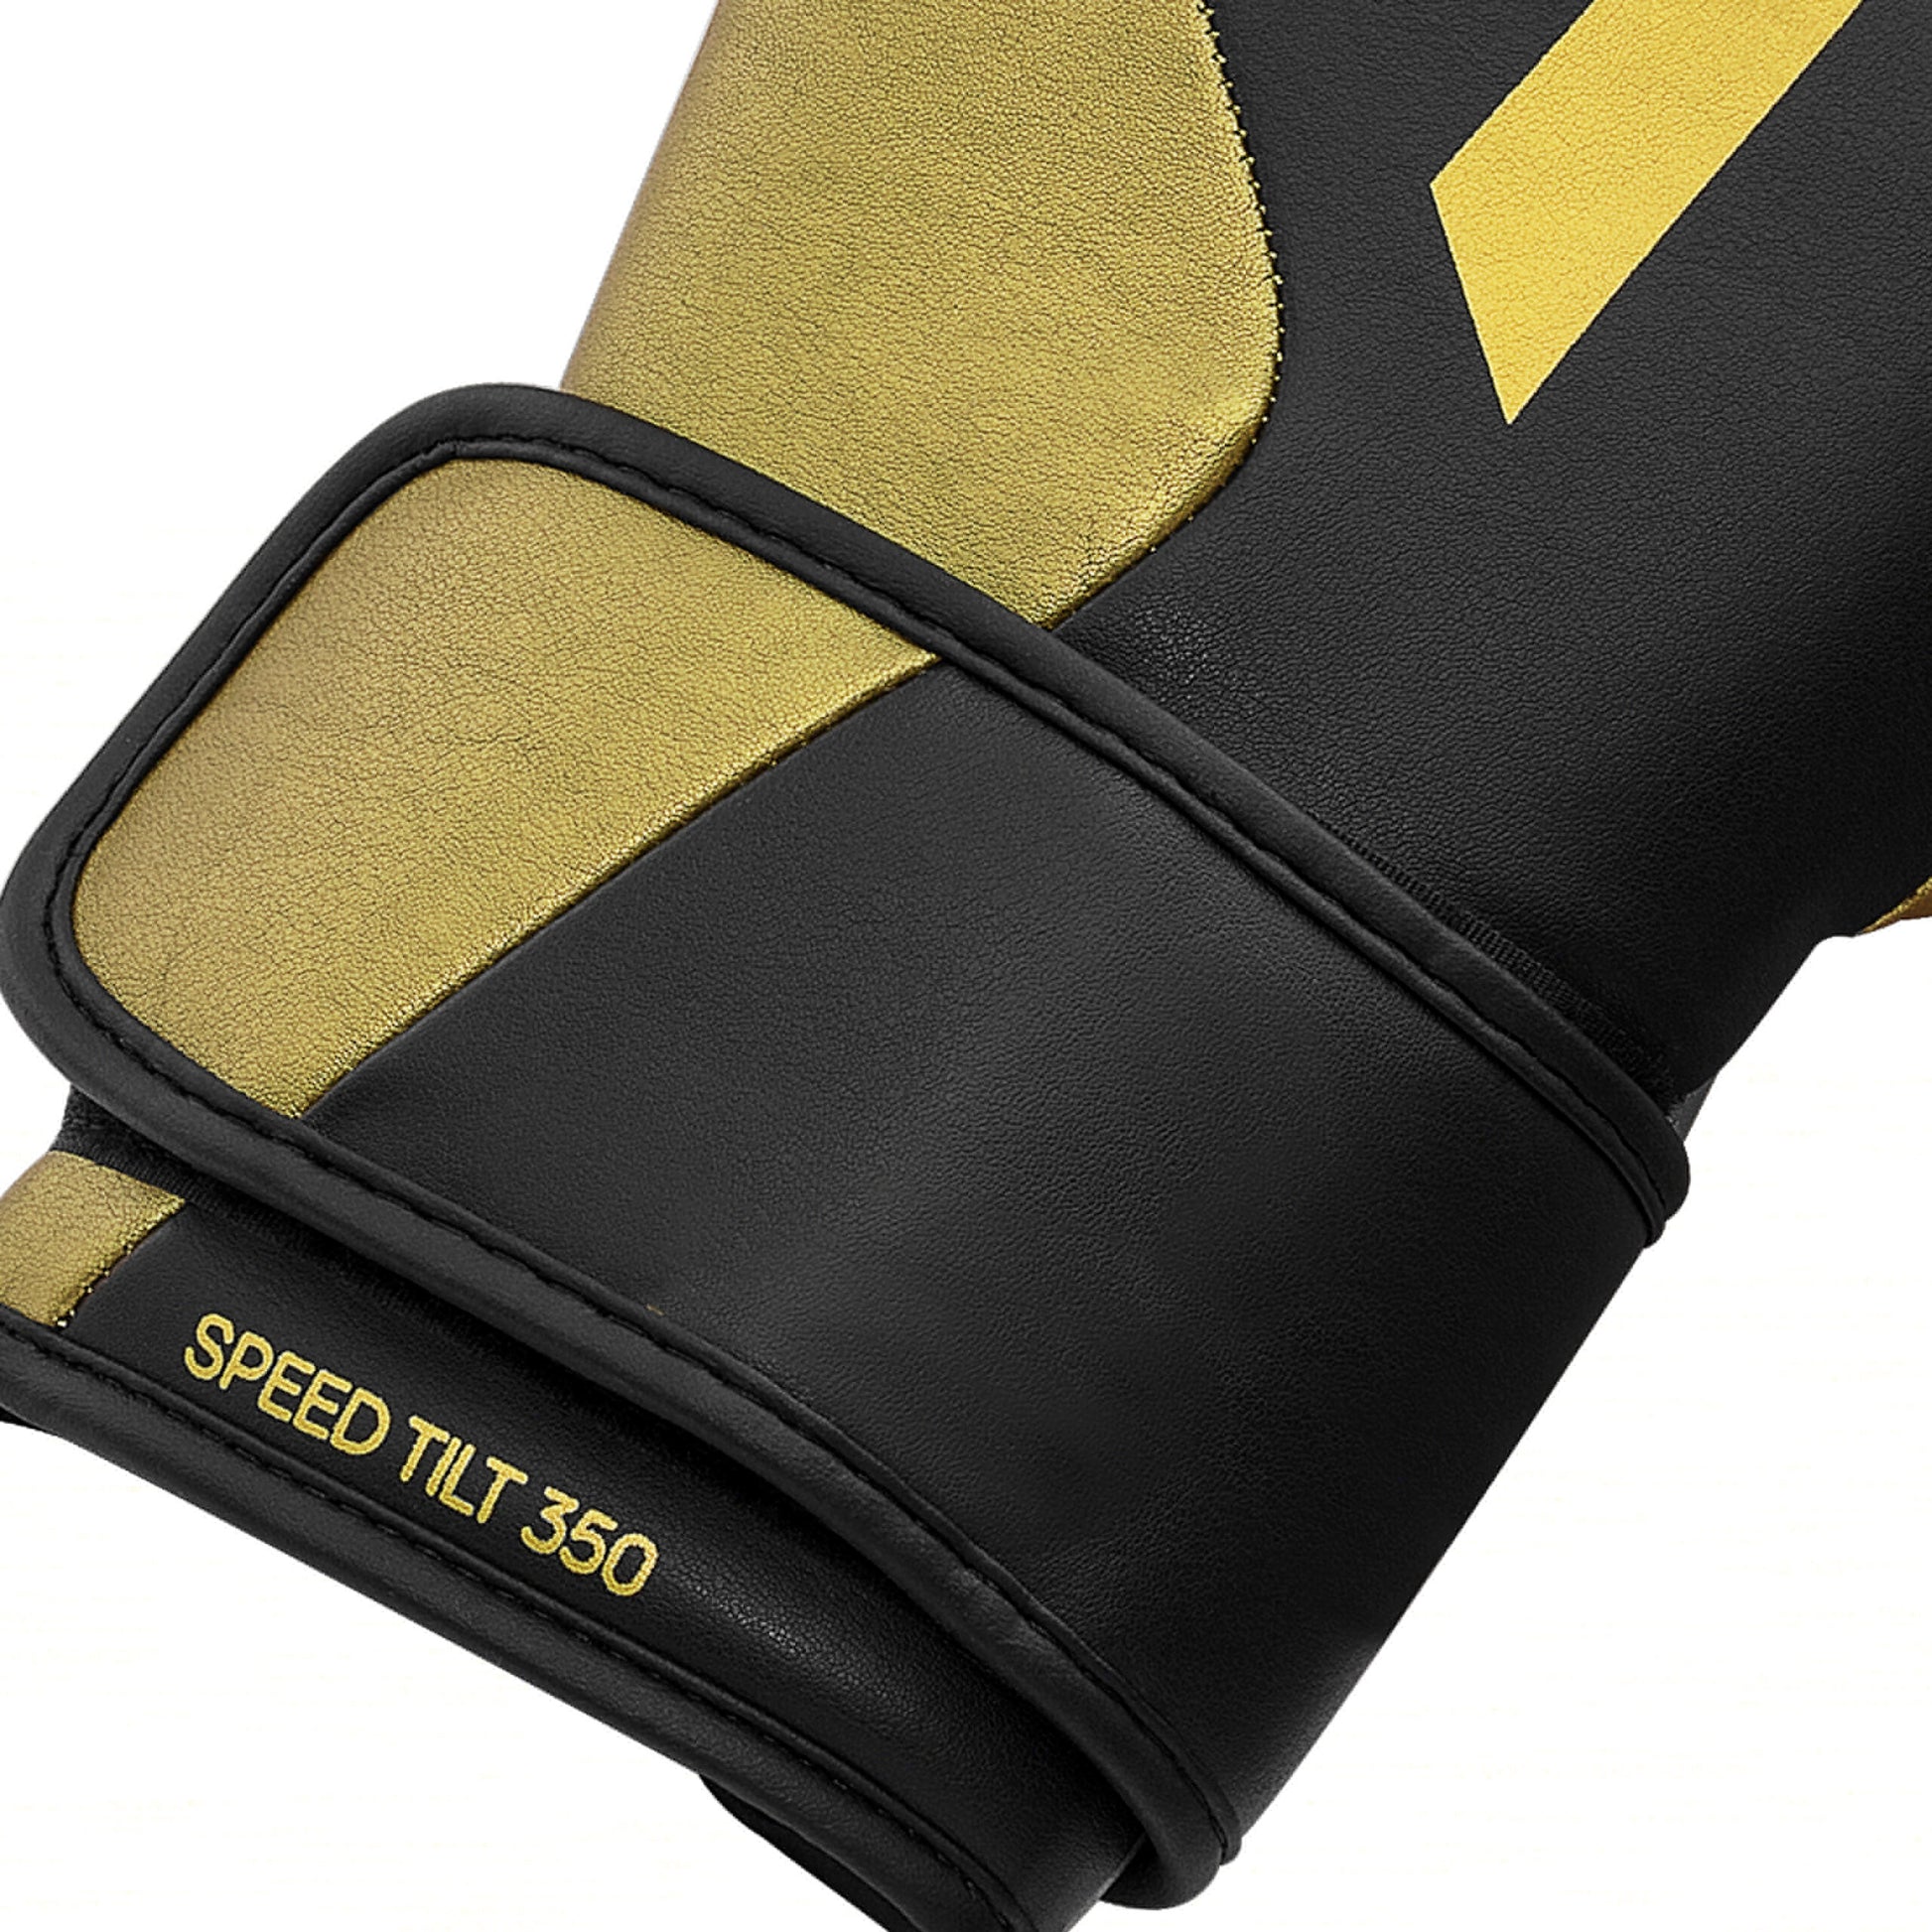 Adispd350tg Velcro Black Gold Close Up 05